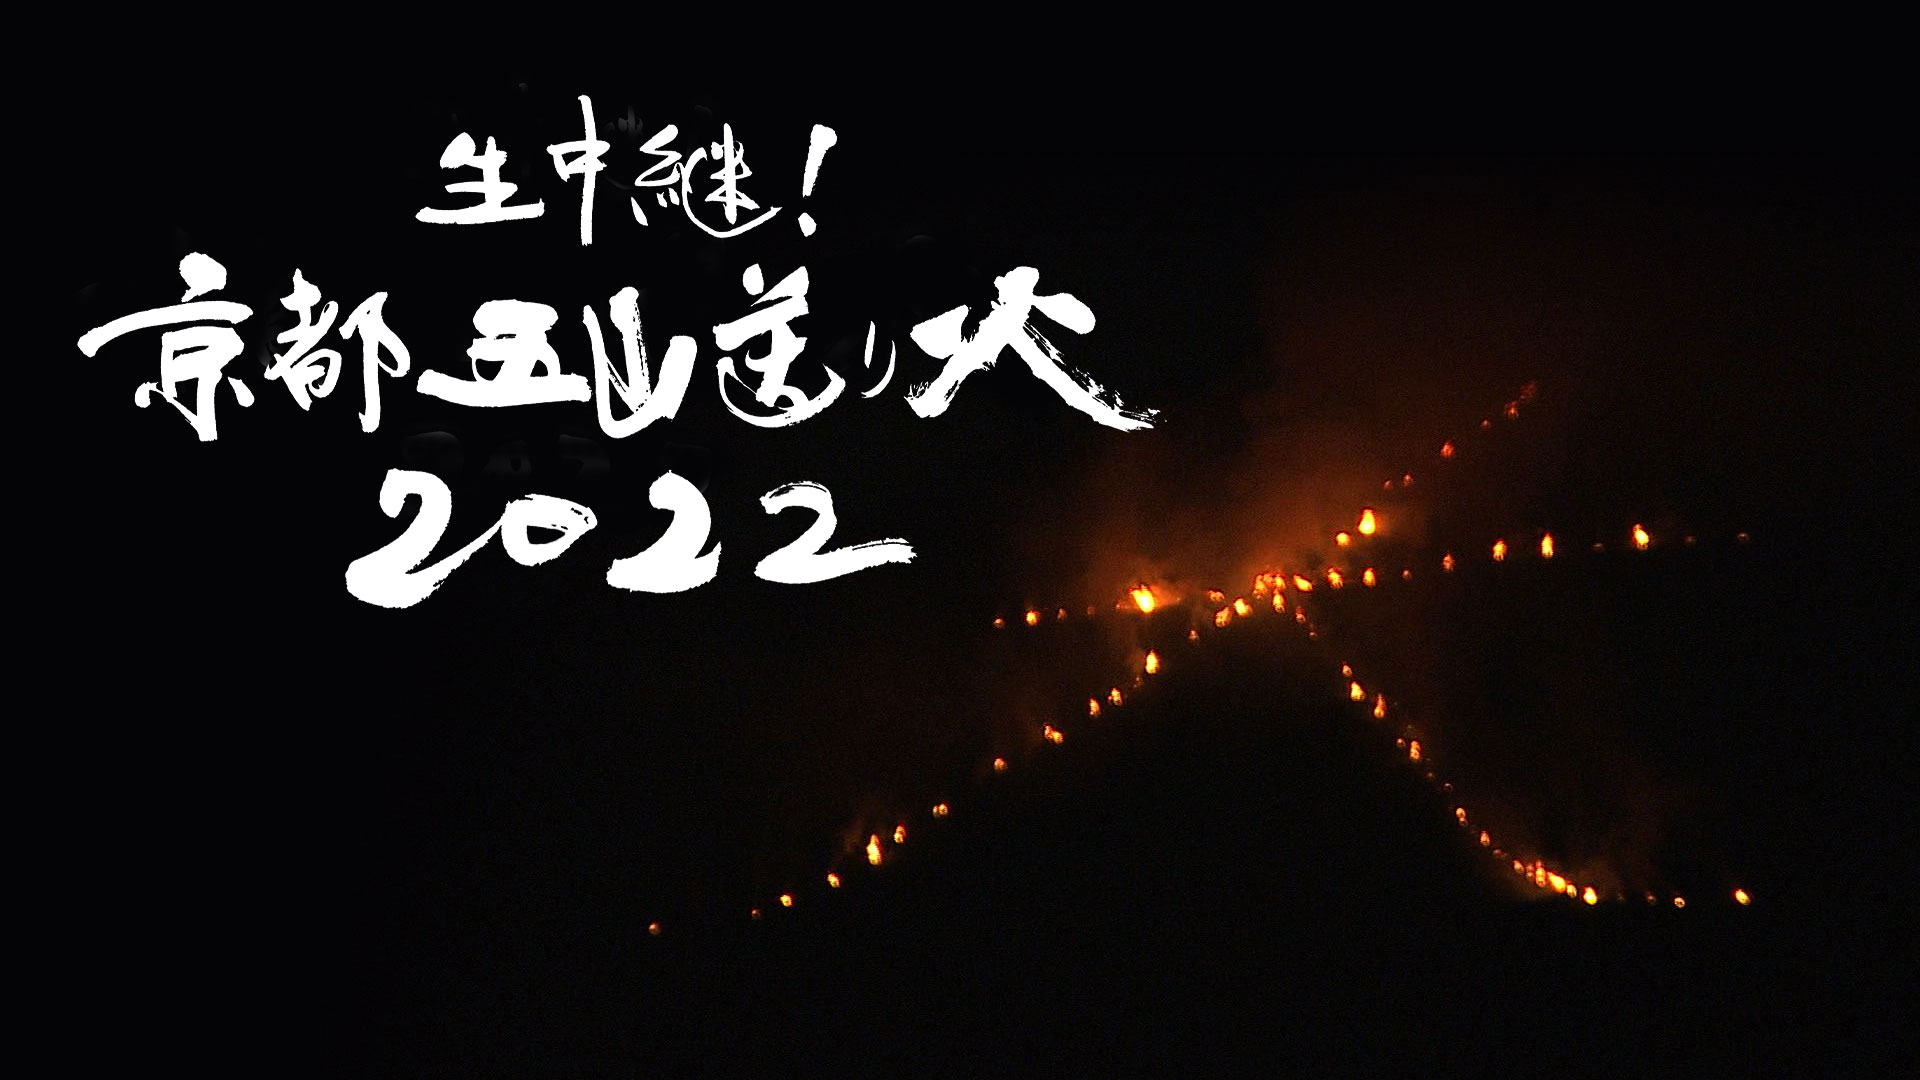 京都五山送り火2022